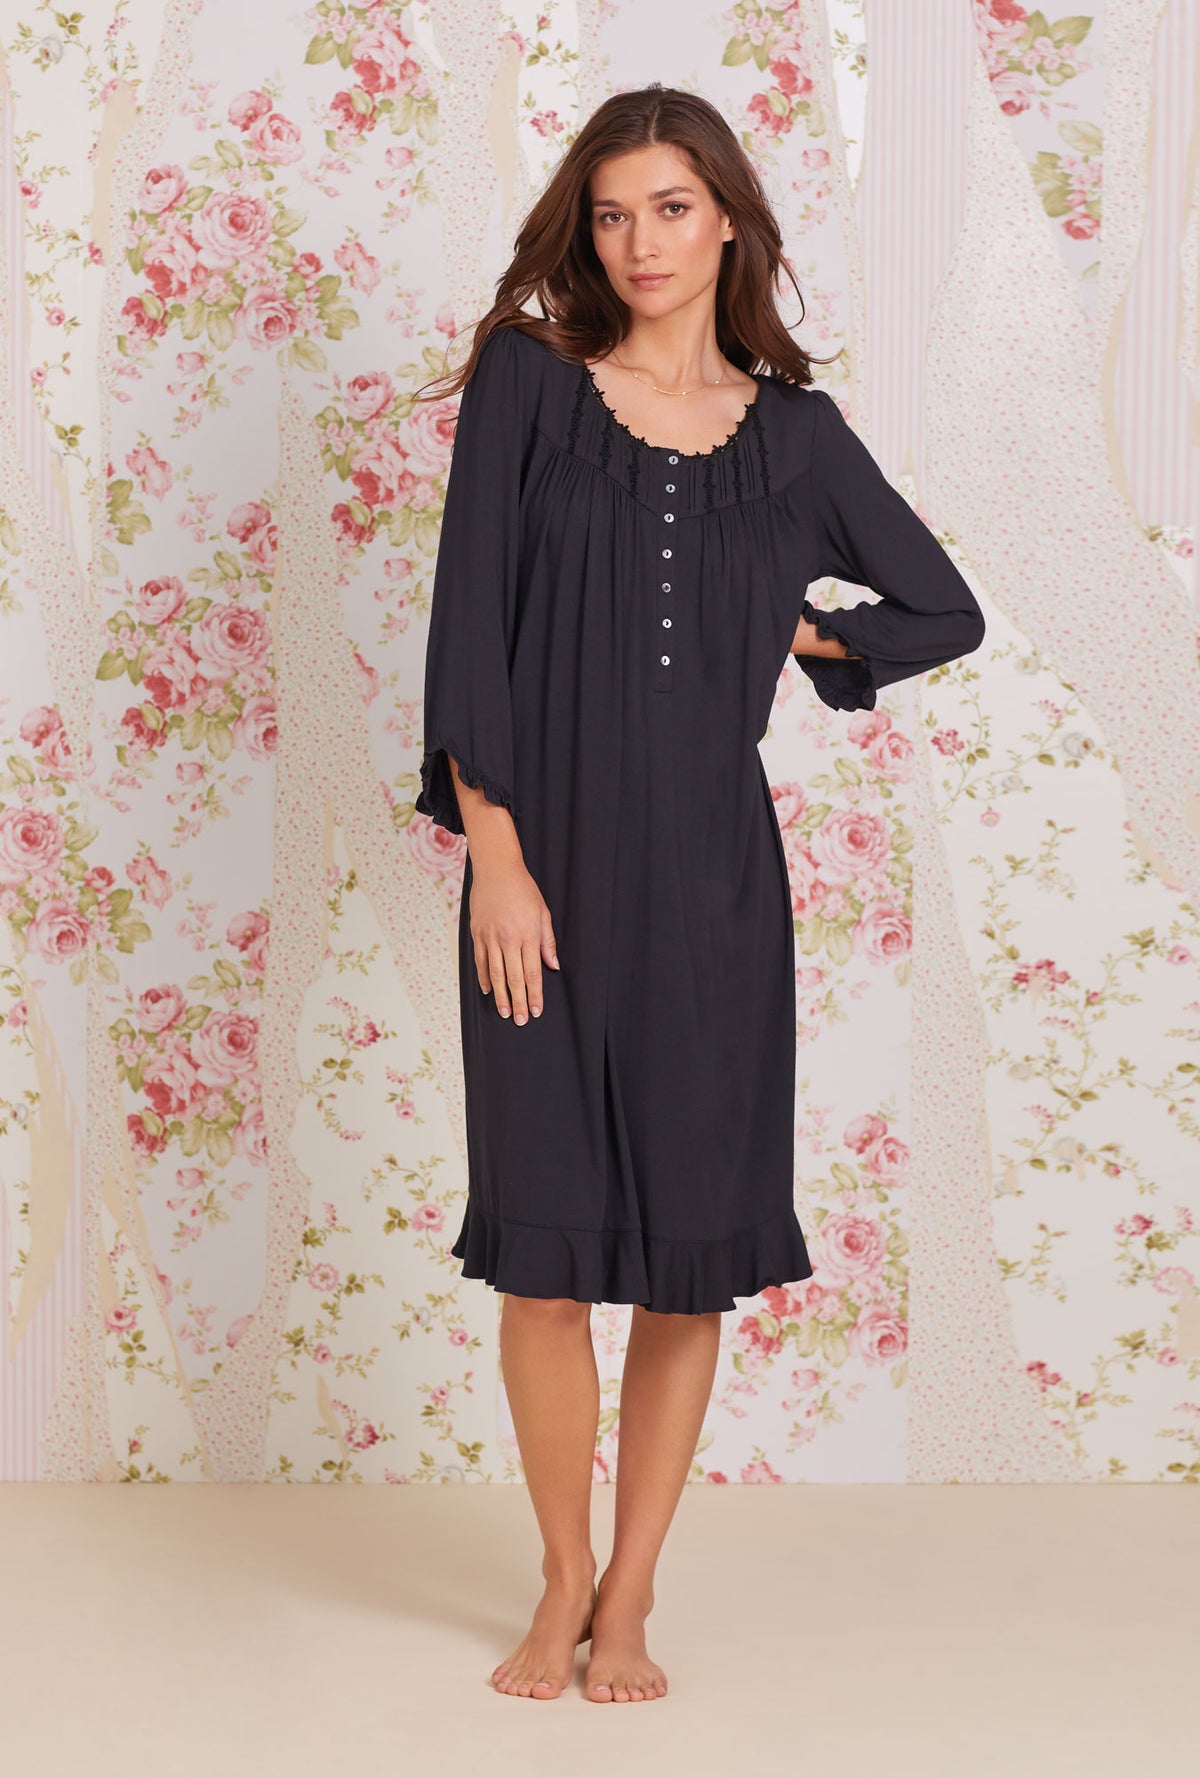 A lady wearing Iconic Black Tencel™ Modal Long Sleeve Waltz Nightgown